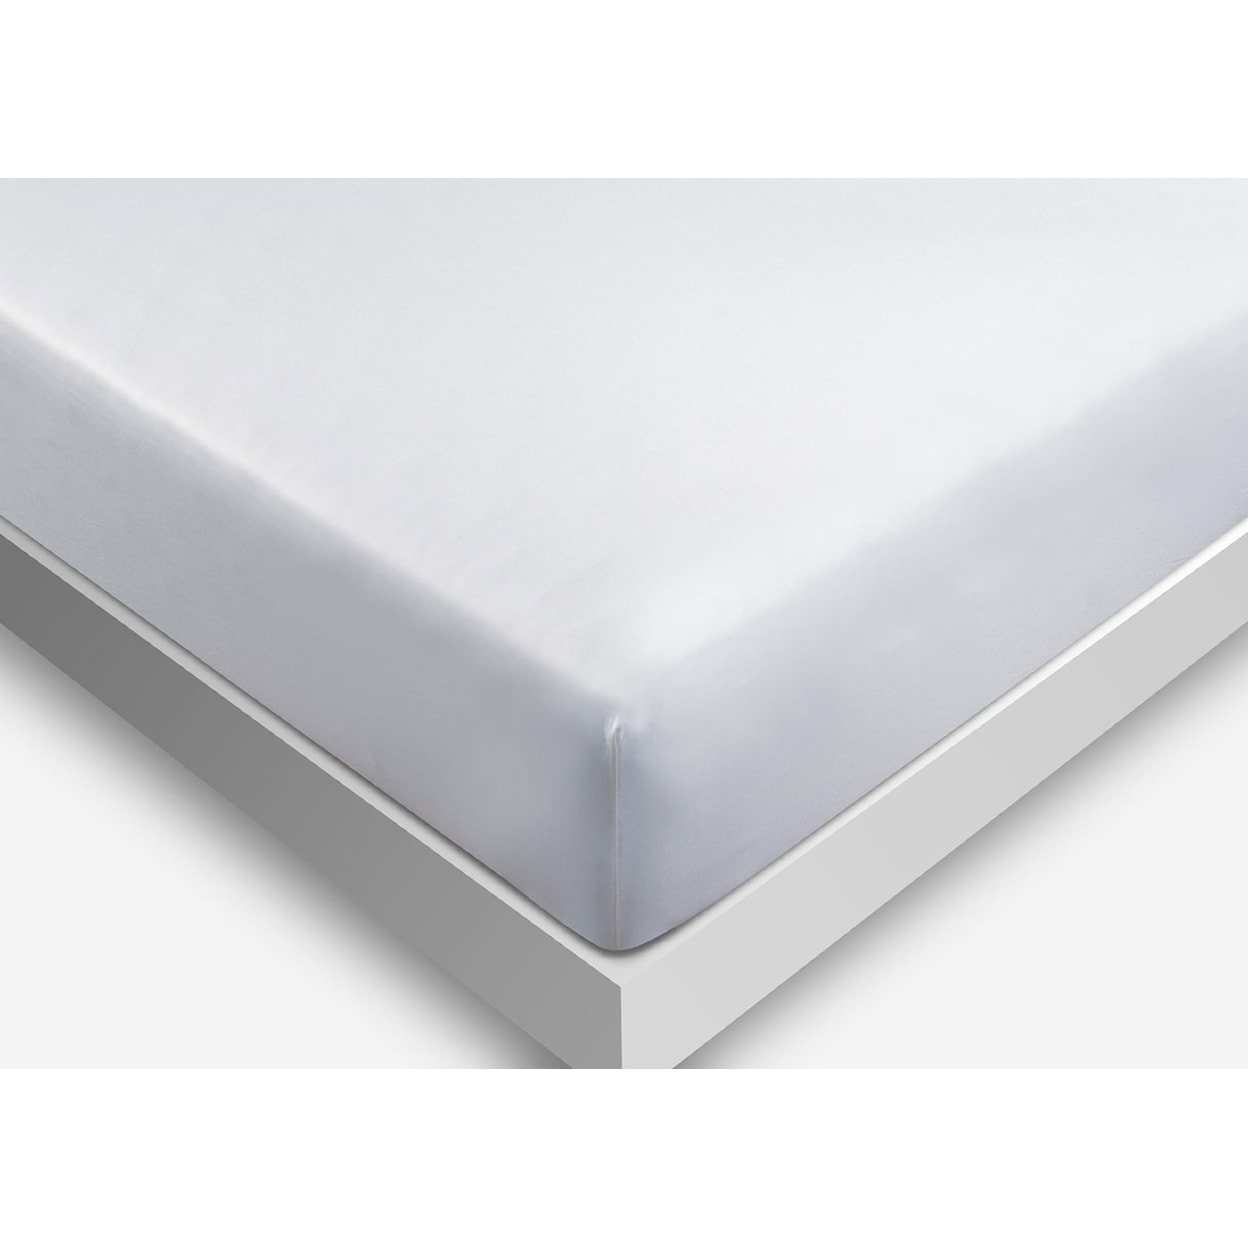 Bedgear Basic Sheets Basic Sheet Set-California King-White